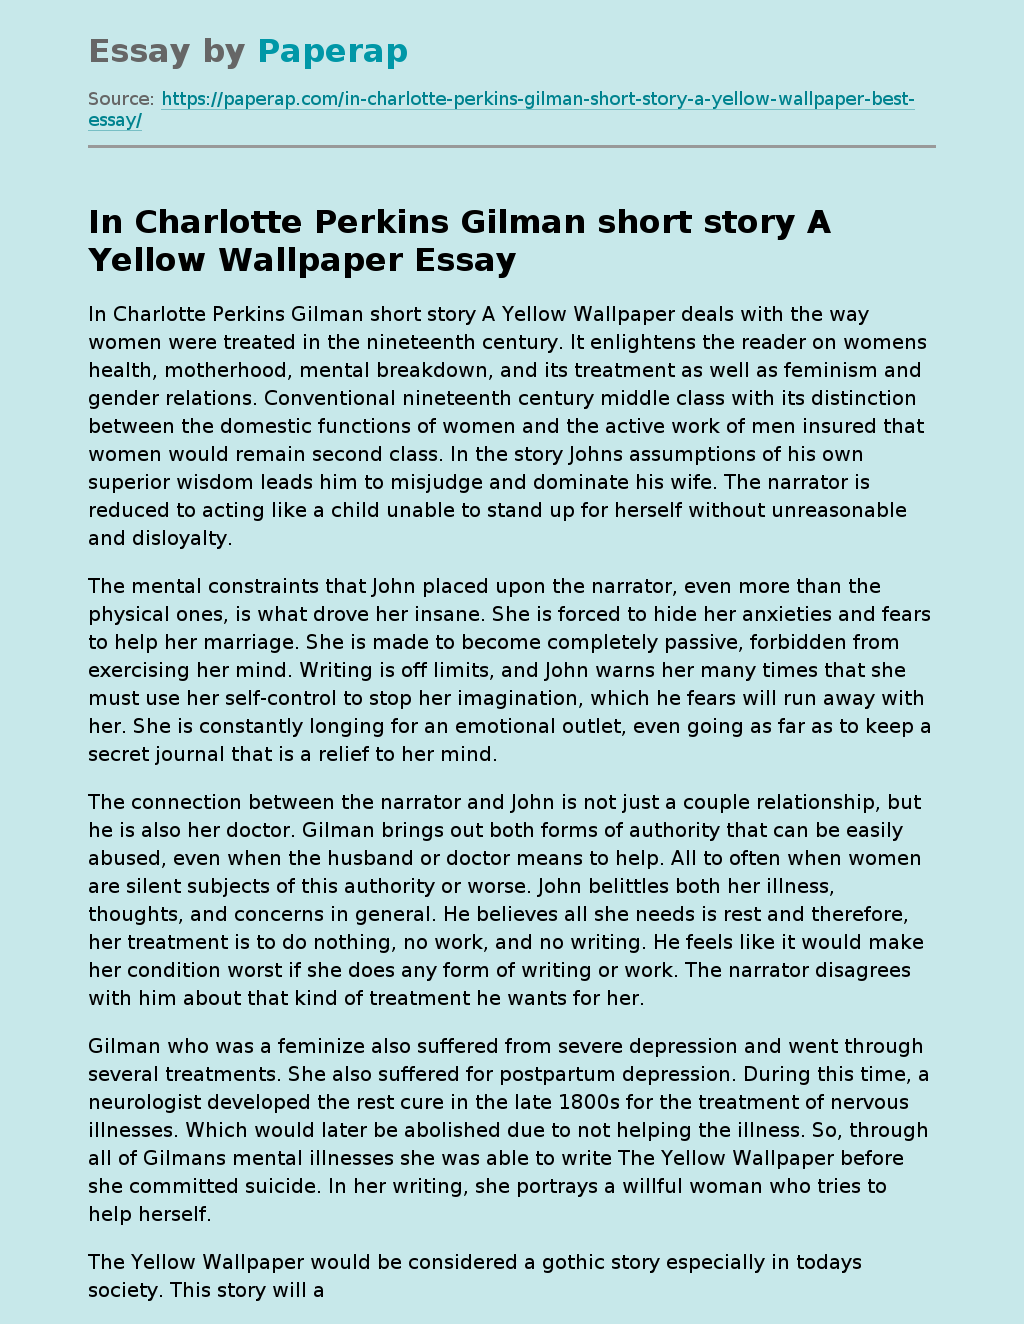 In Charlotte Perkins Gilman short story A Yellow Wallpaper